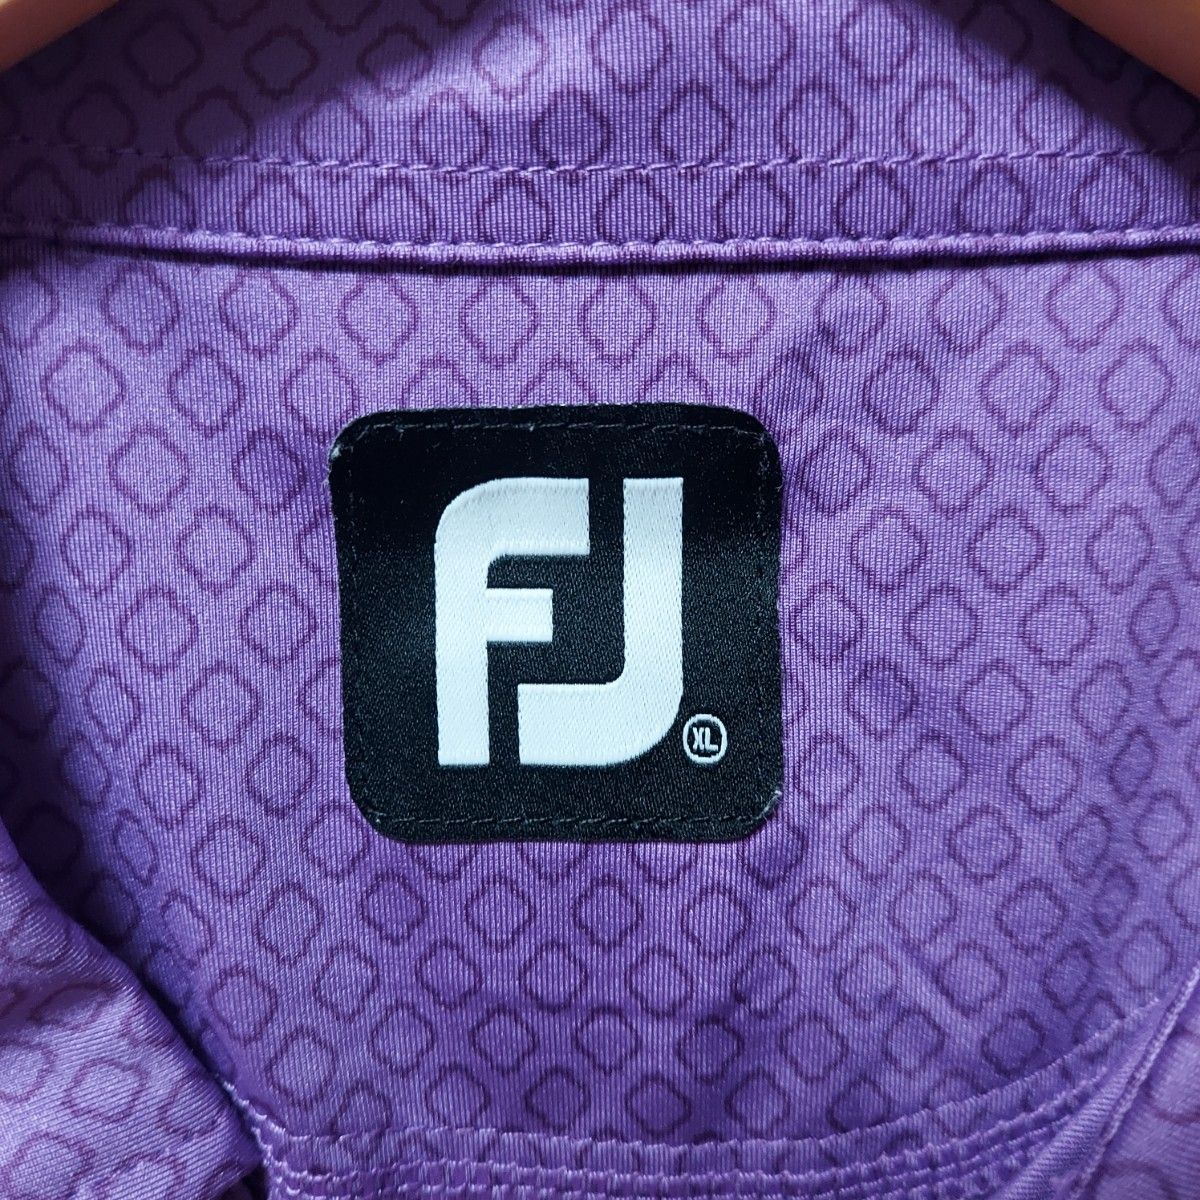 FJ　フットジョイ　メンズ　XLサイズ　ゴルフウェア　半袖　シャツ　ポロシャツ　